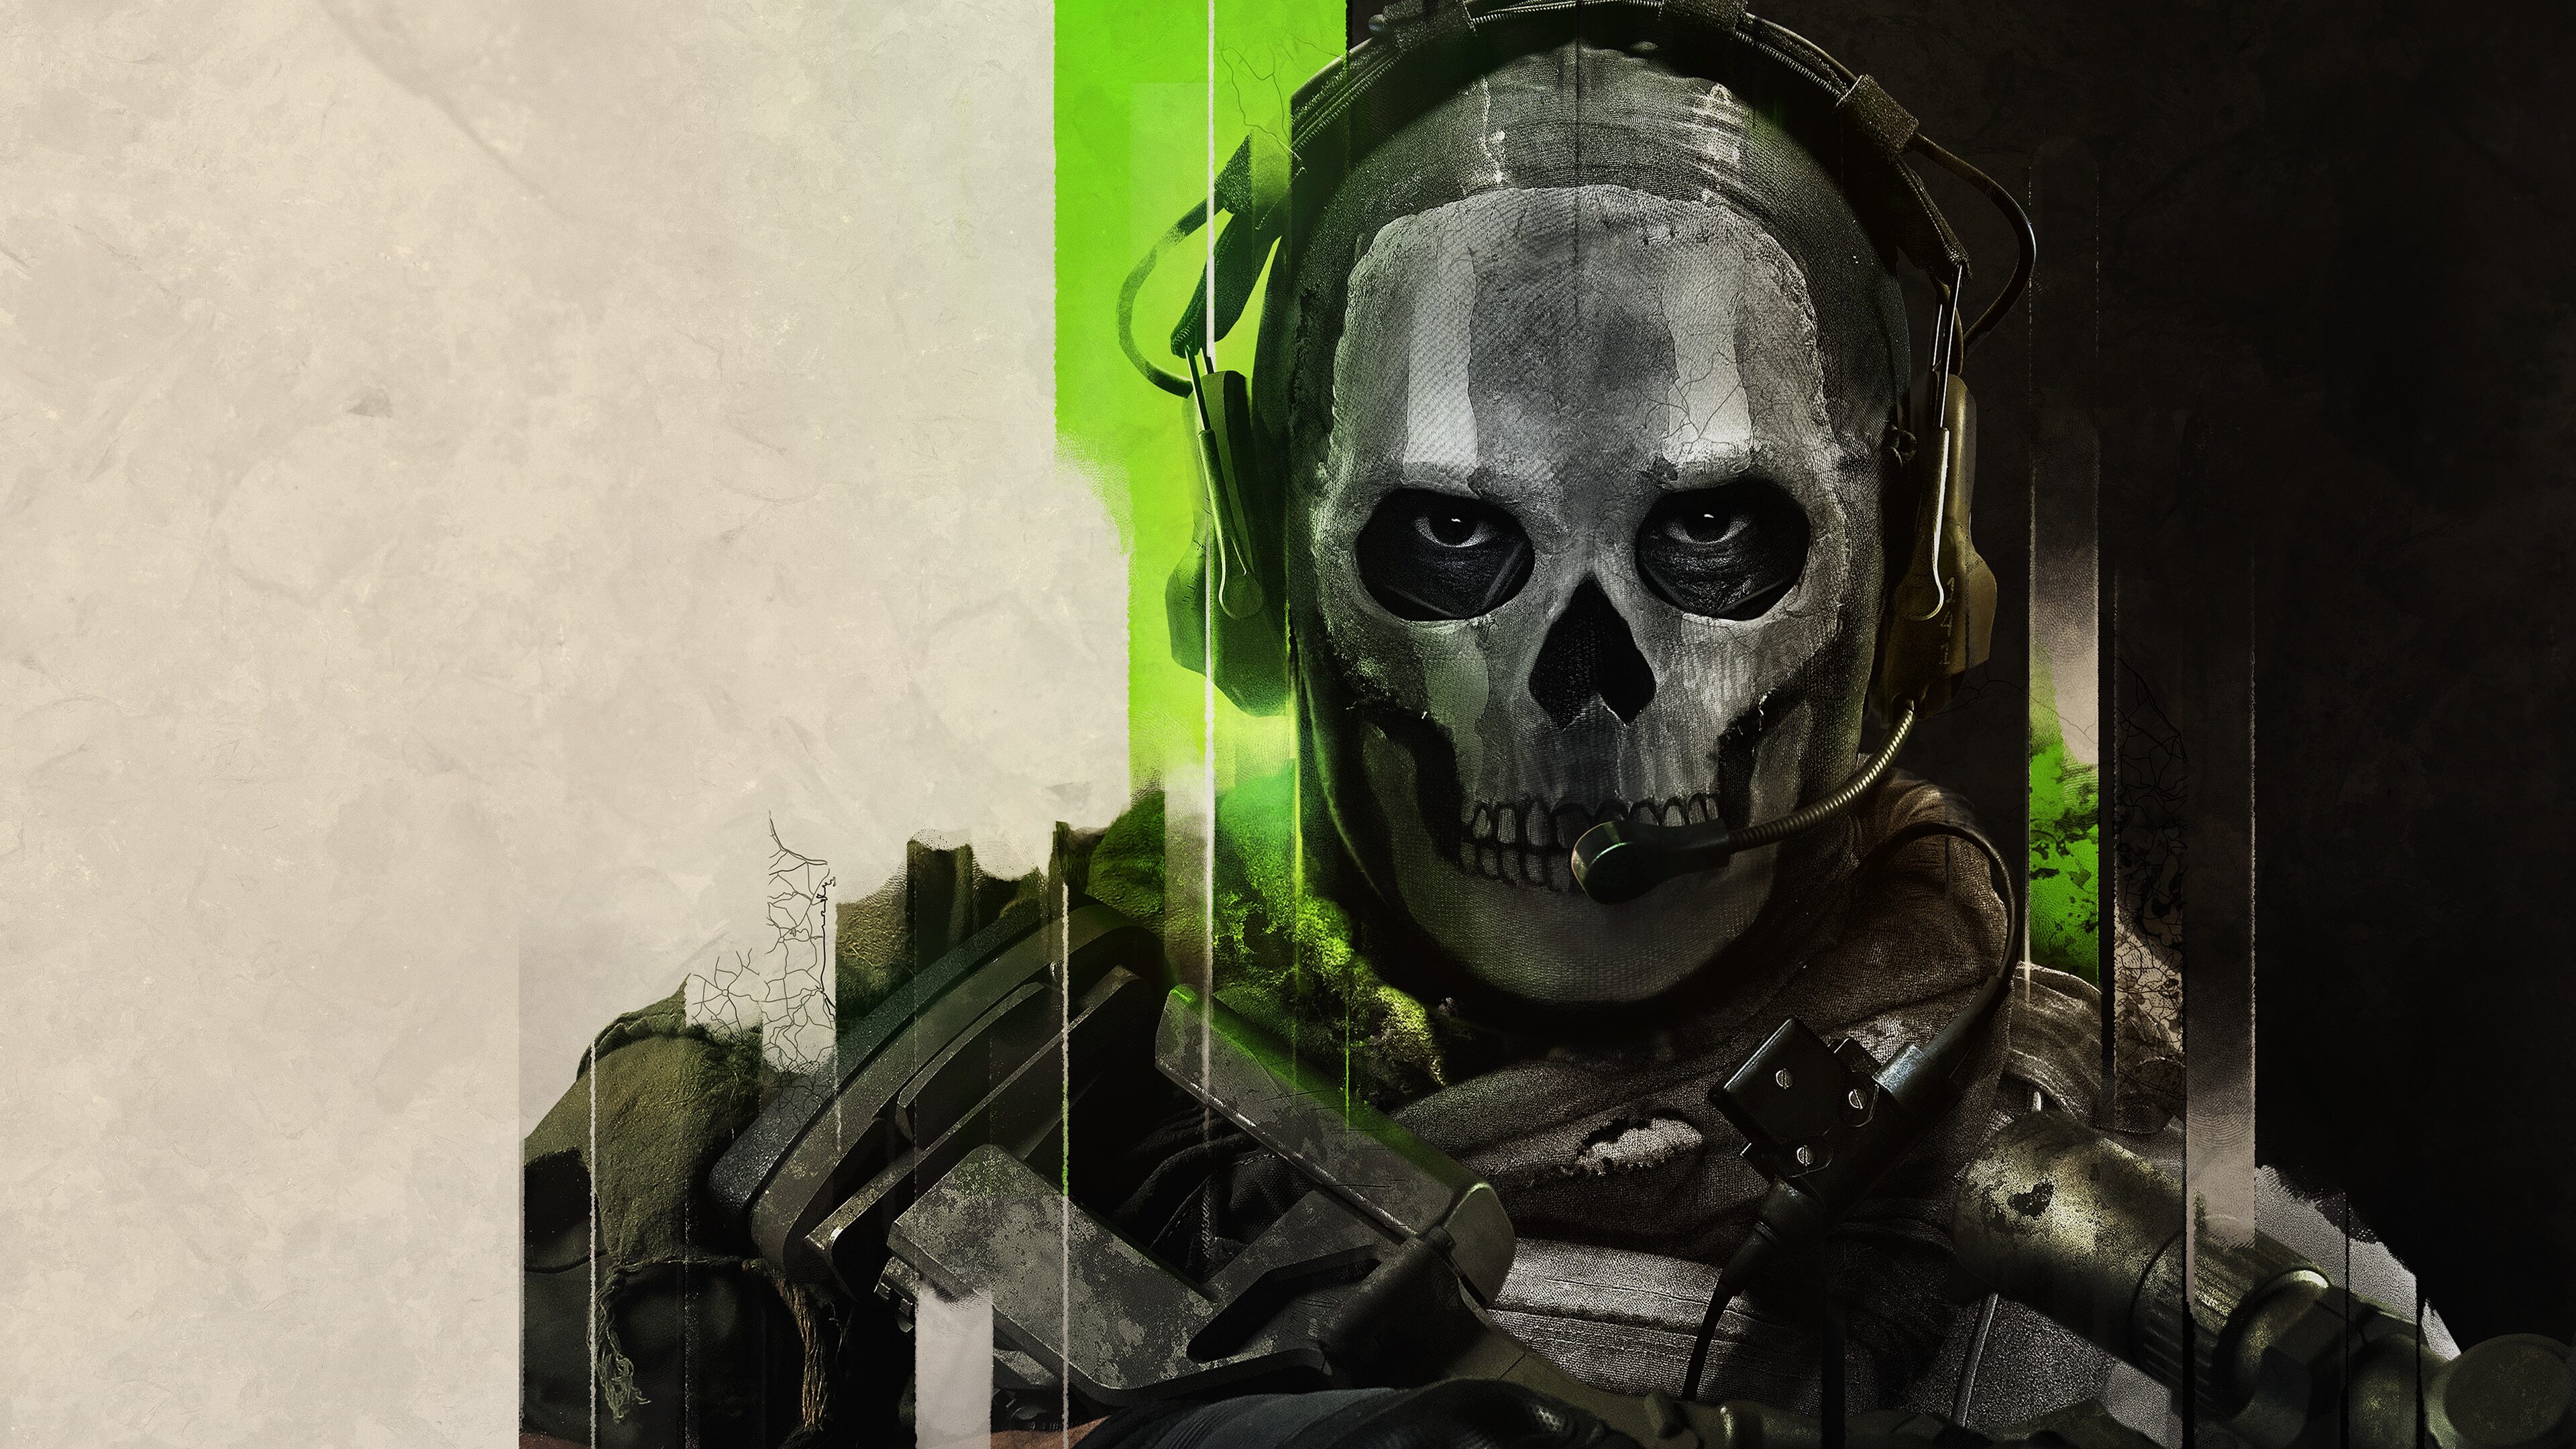 Official “Ultimate Team” Teaser - Call of Duty: Modern Warfare II